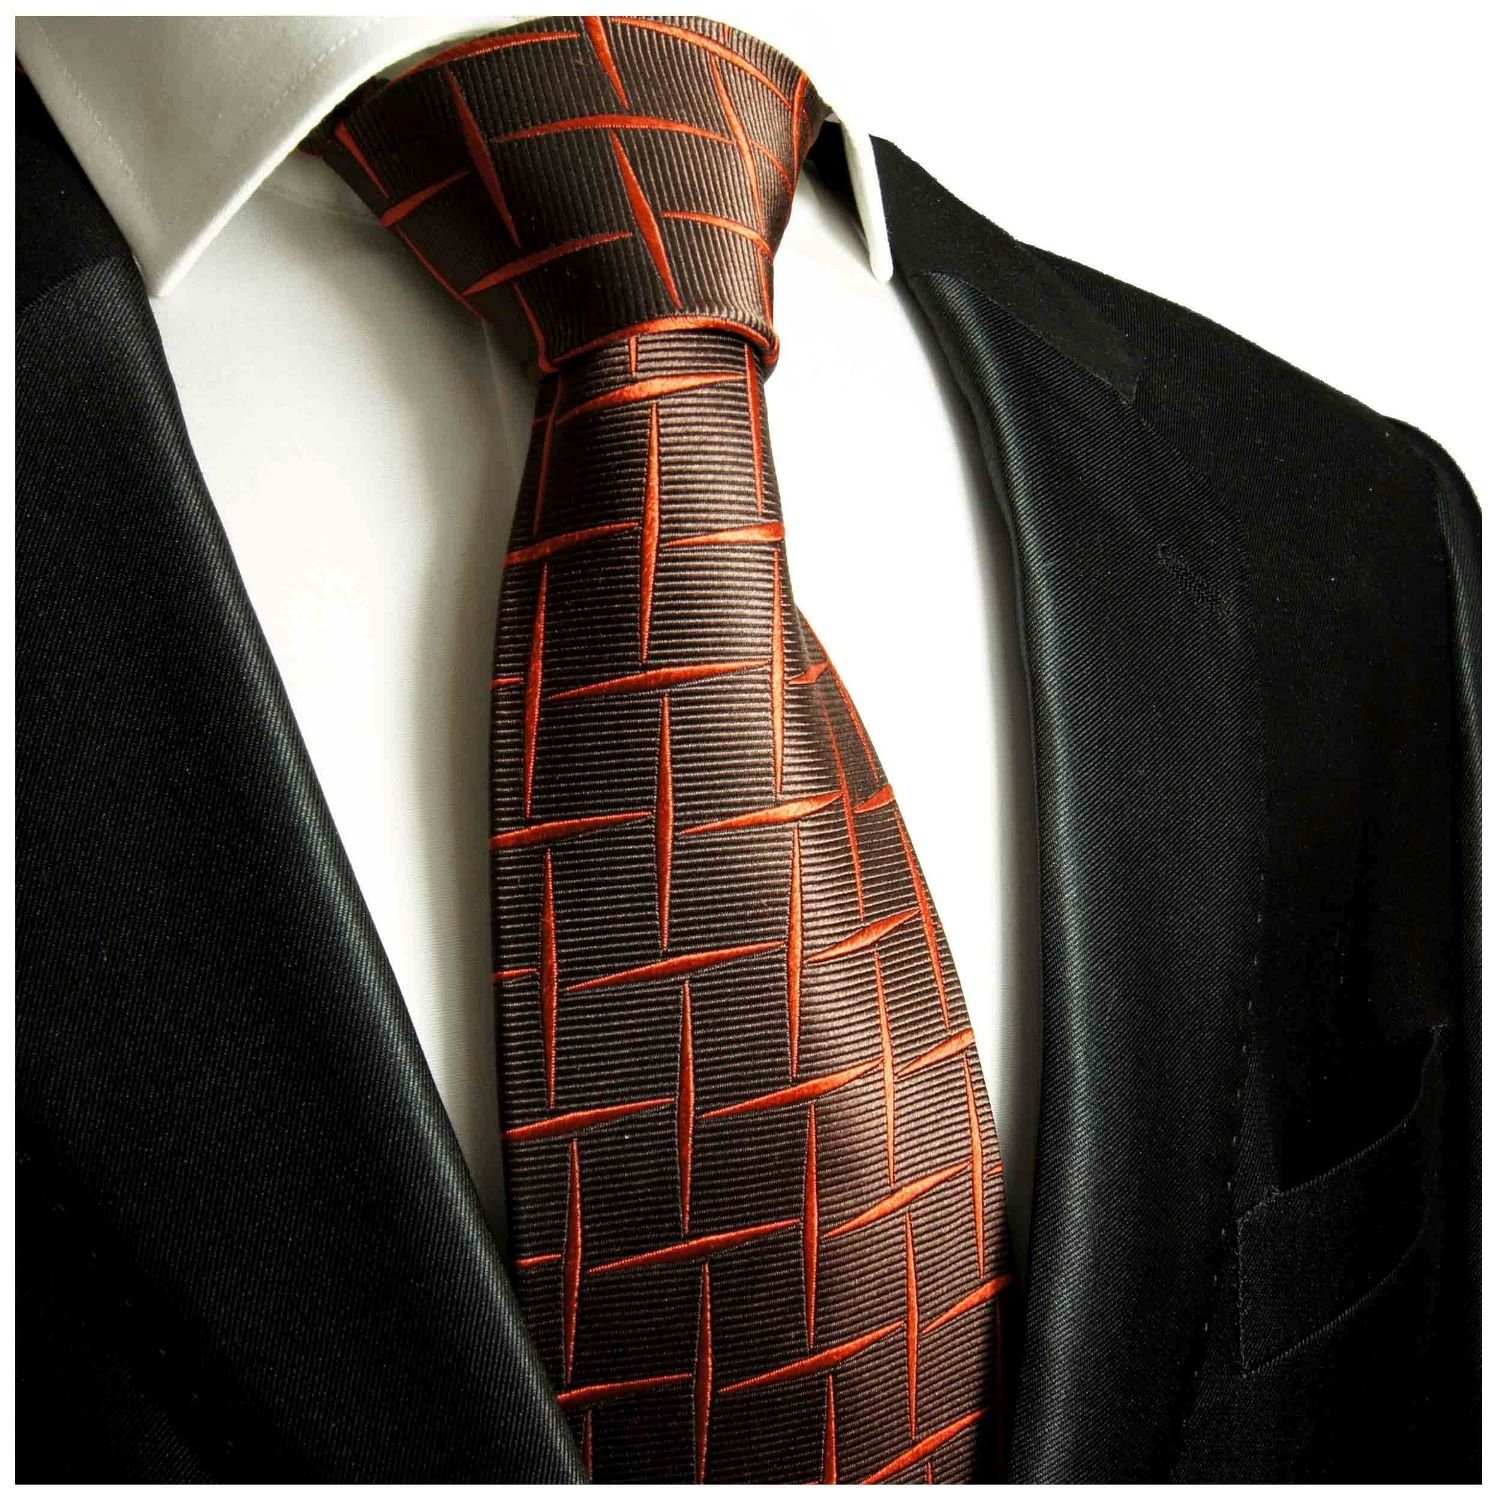 Paul Malone Schmal 412 Seide Krawatte Herren orange Designer 100% rotbraun modern kariert Schlips (6cm), Seidenkrawatte